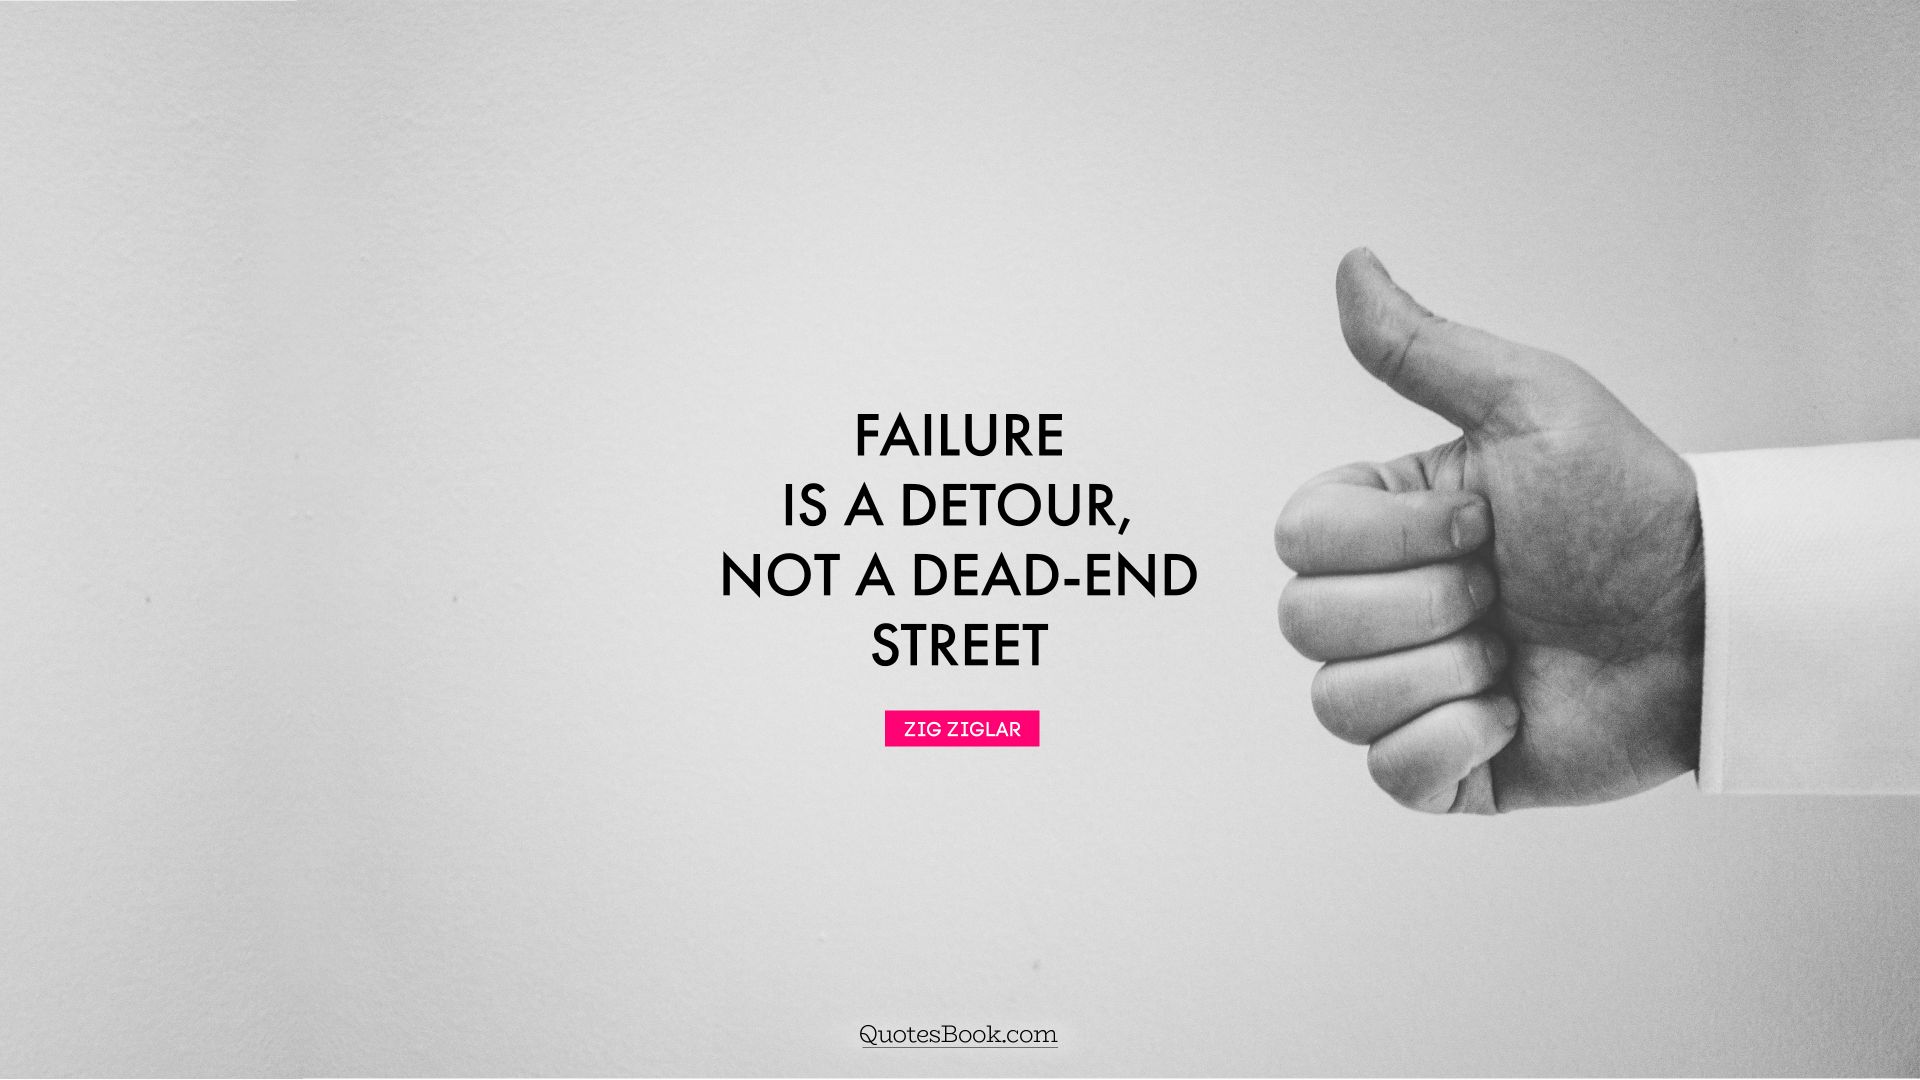 Failure is a detour, not a dead-end street. - Quote by Zig Ziglar